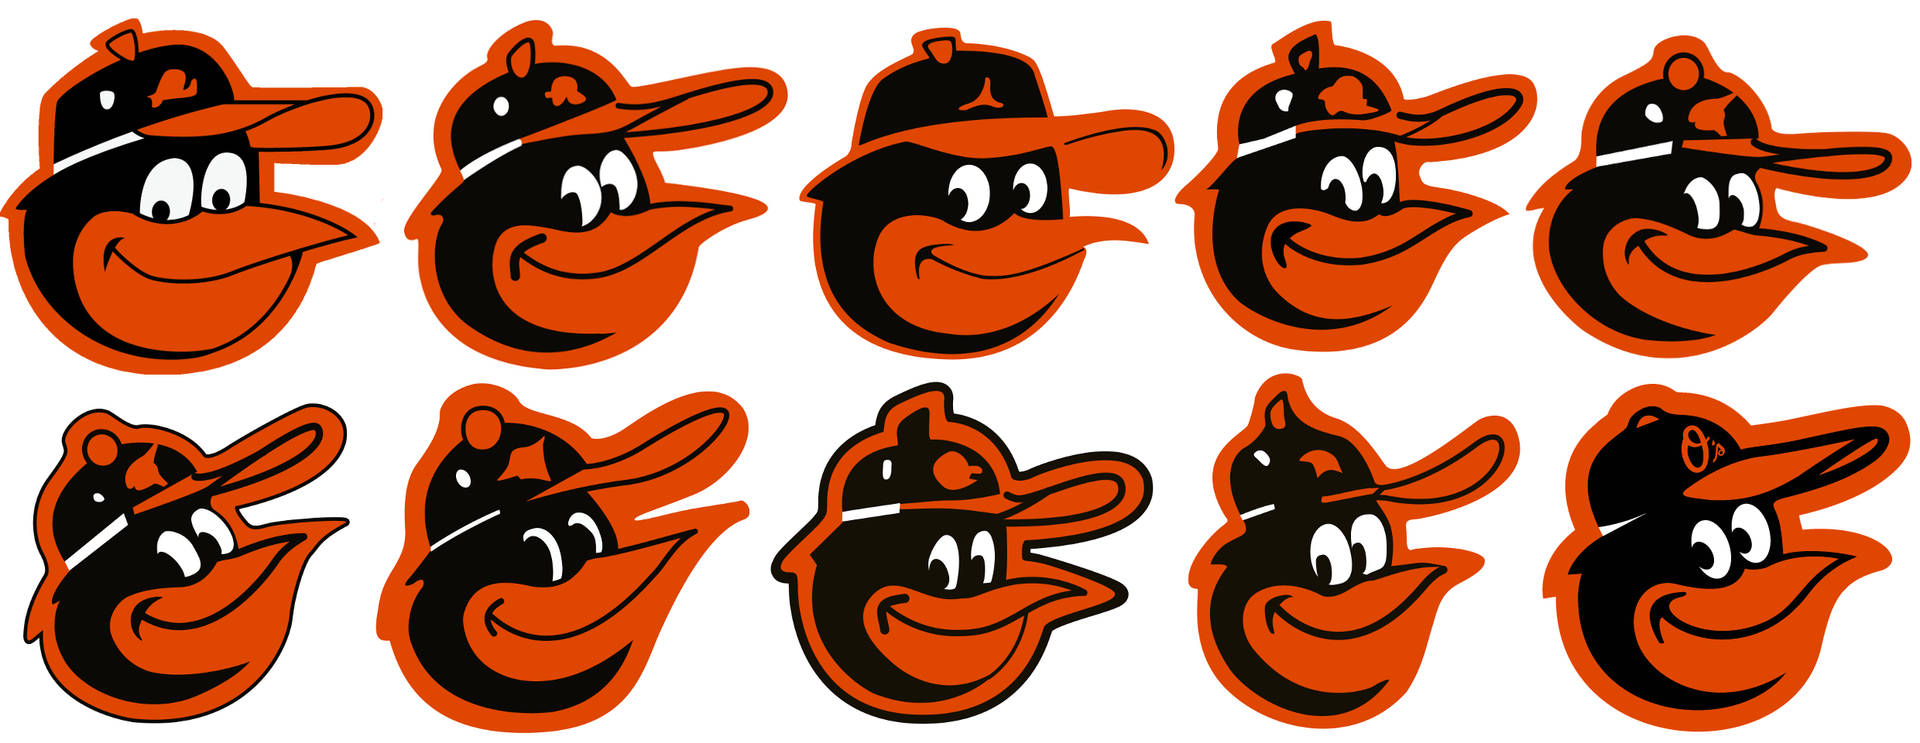 Baltimore Orioles Bird Mascot Logo in Vibrant Colors Wallpaper